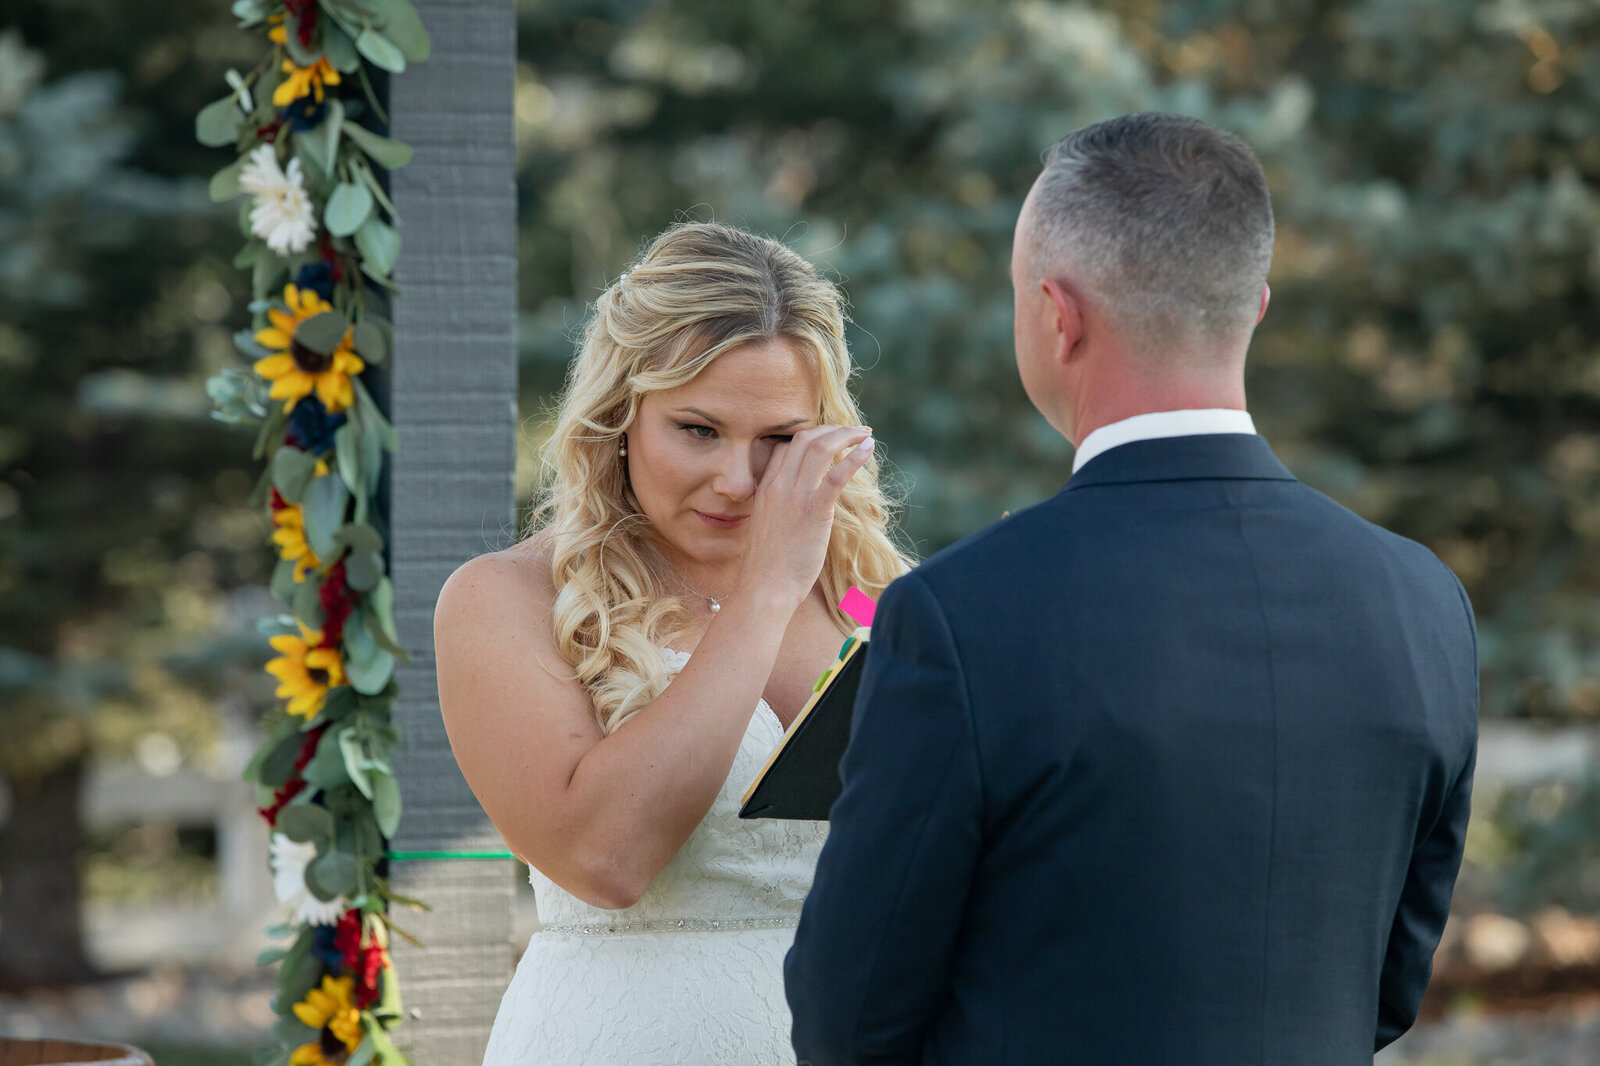 Tulsa Oklahoma wedding photography under$3,000